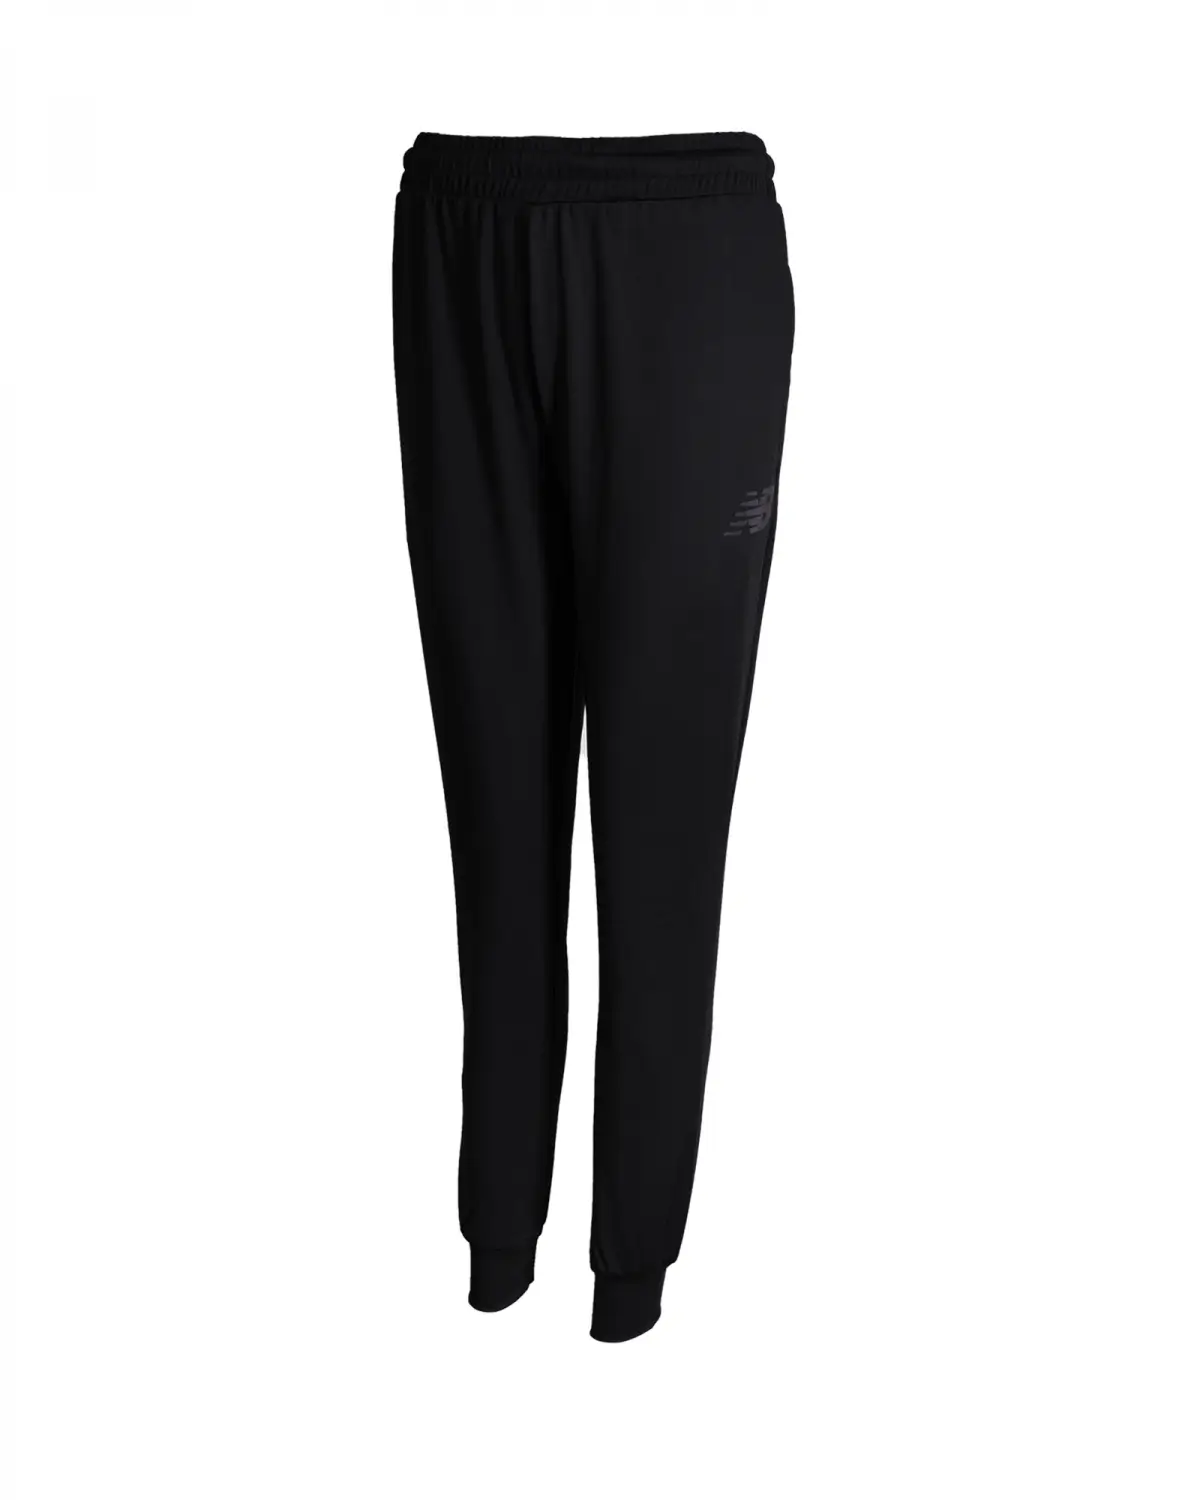 New Balance Lifestyle Siyah Kadın Pantolon - WPP3132-BK